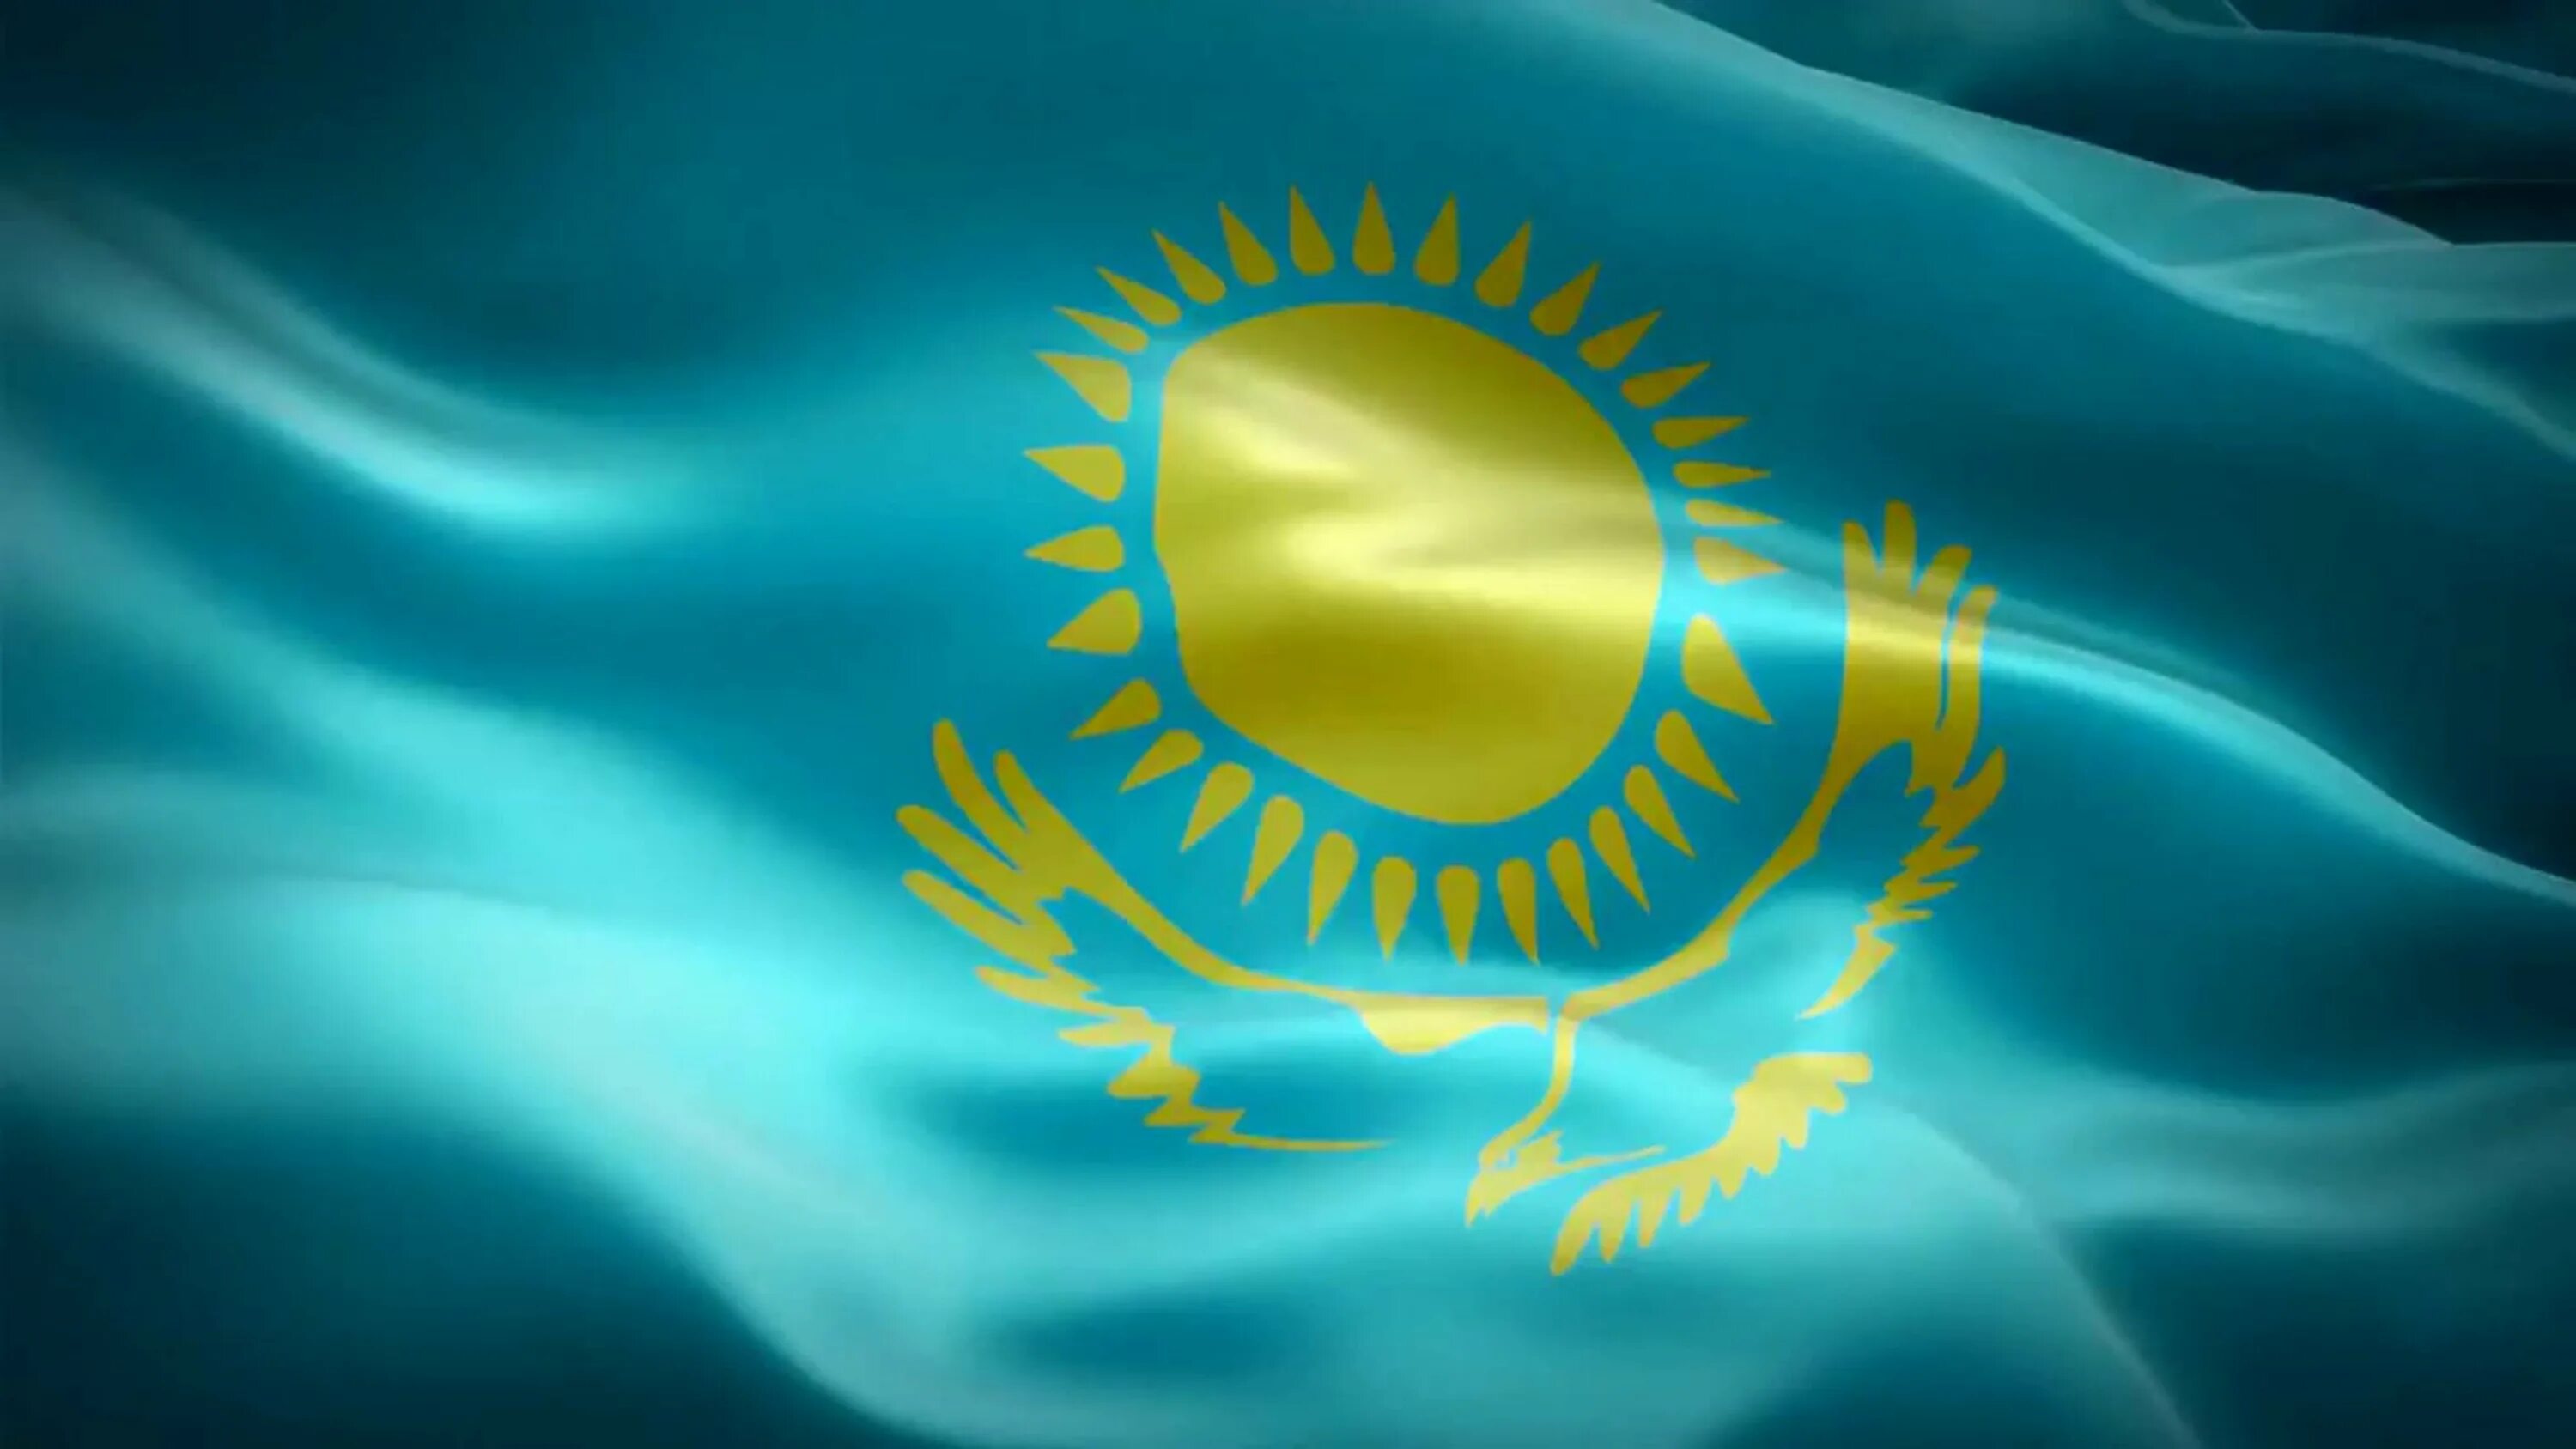 Kazakh videos. Флаг Казахстана. Флаг Казакст. Ь лаг Казахстана. Флаг Казахстана и Казахстан.